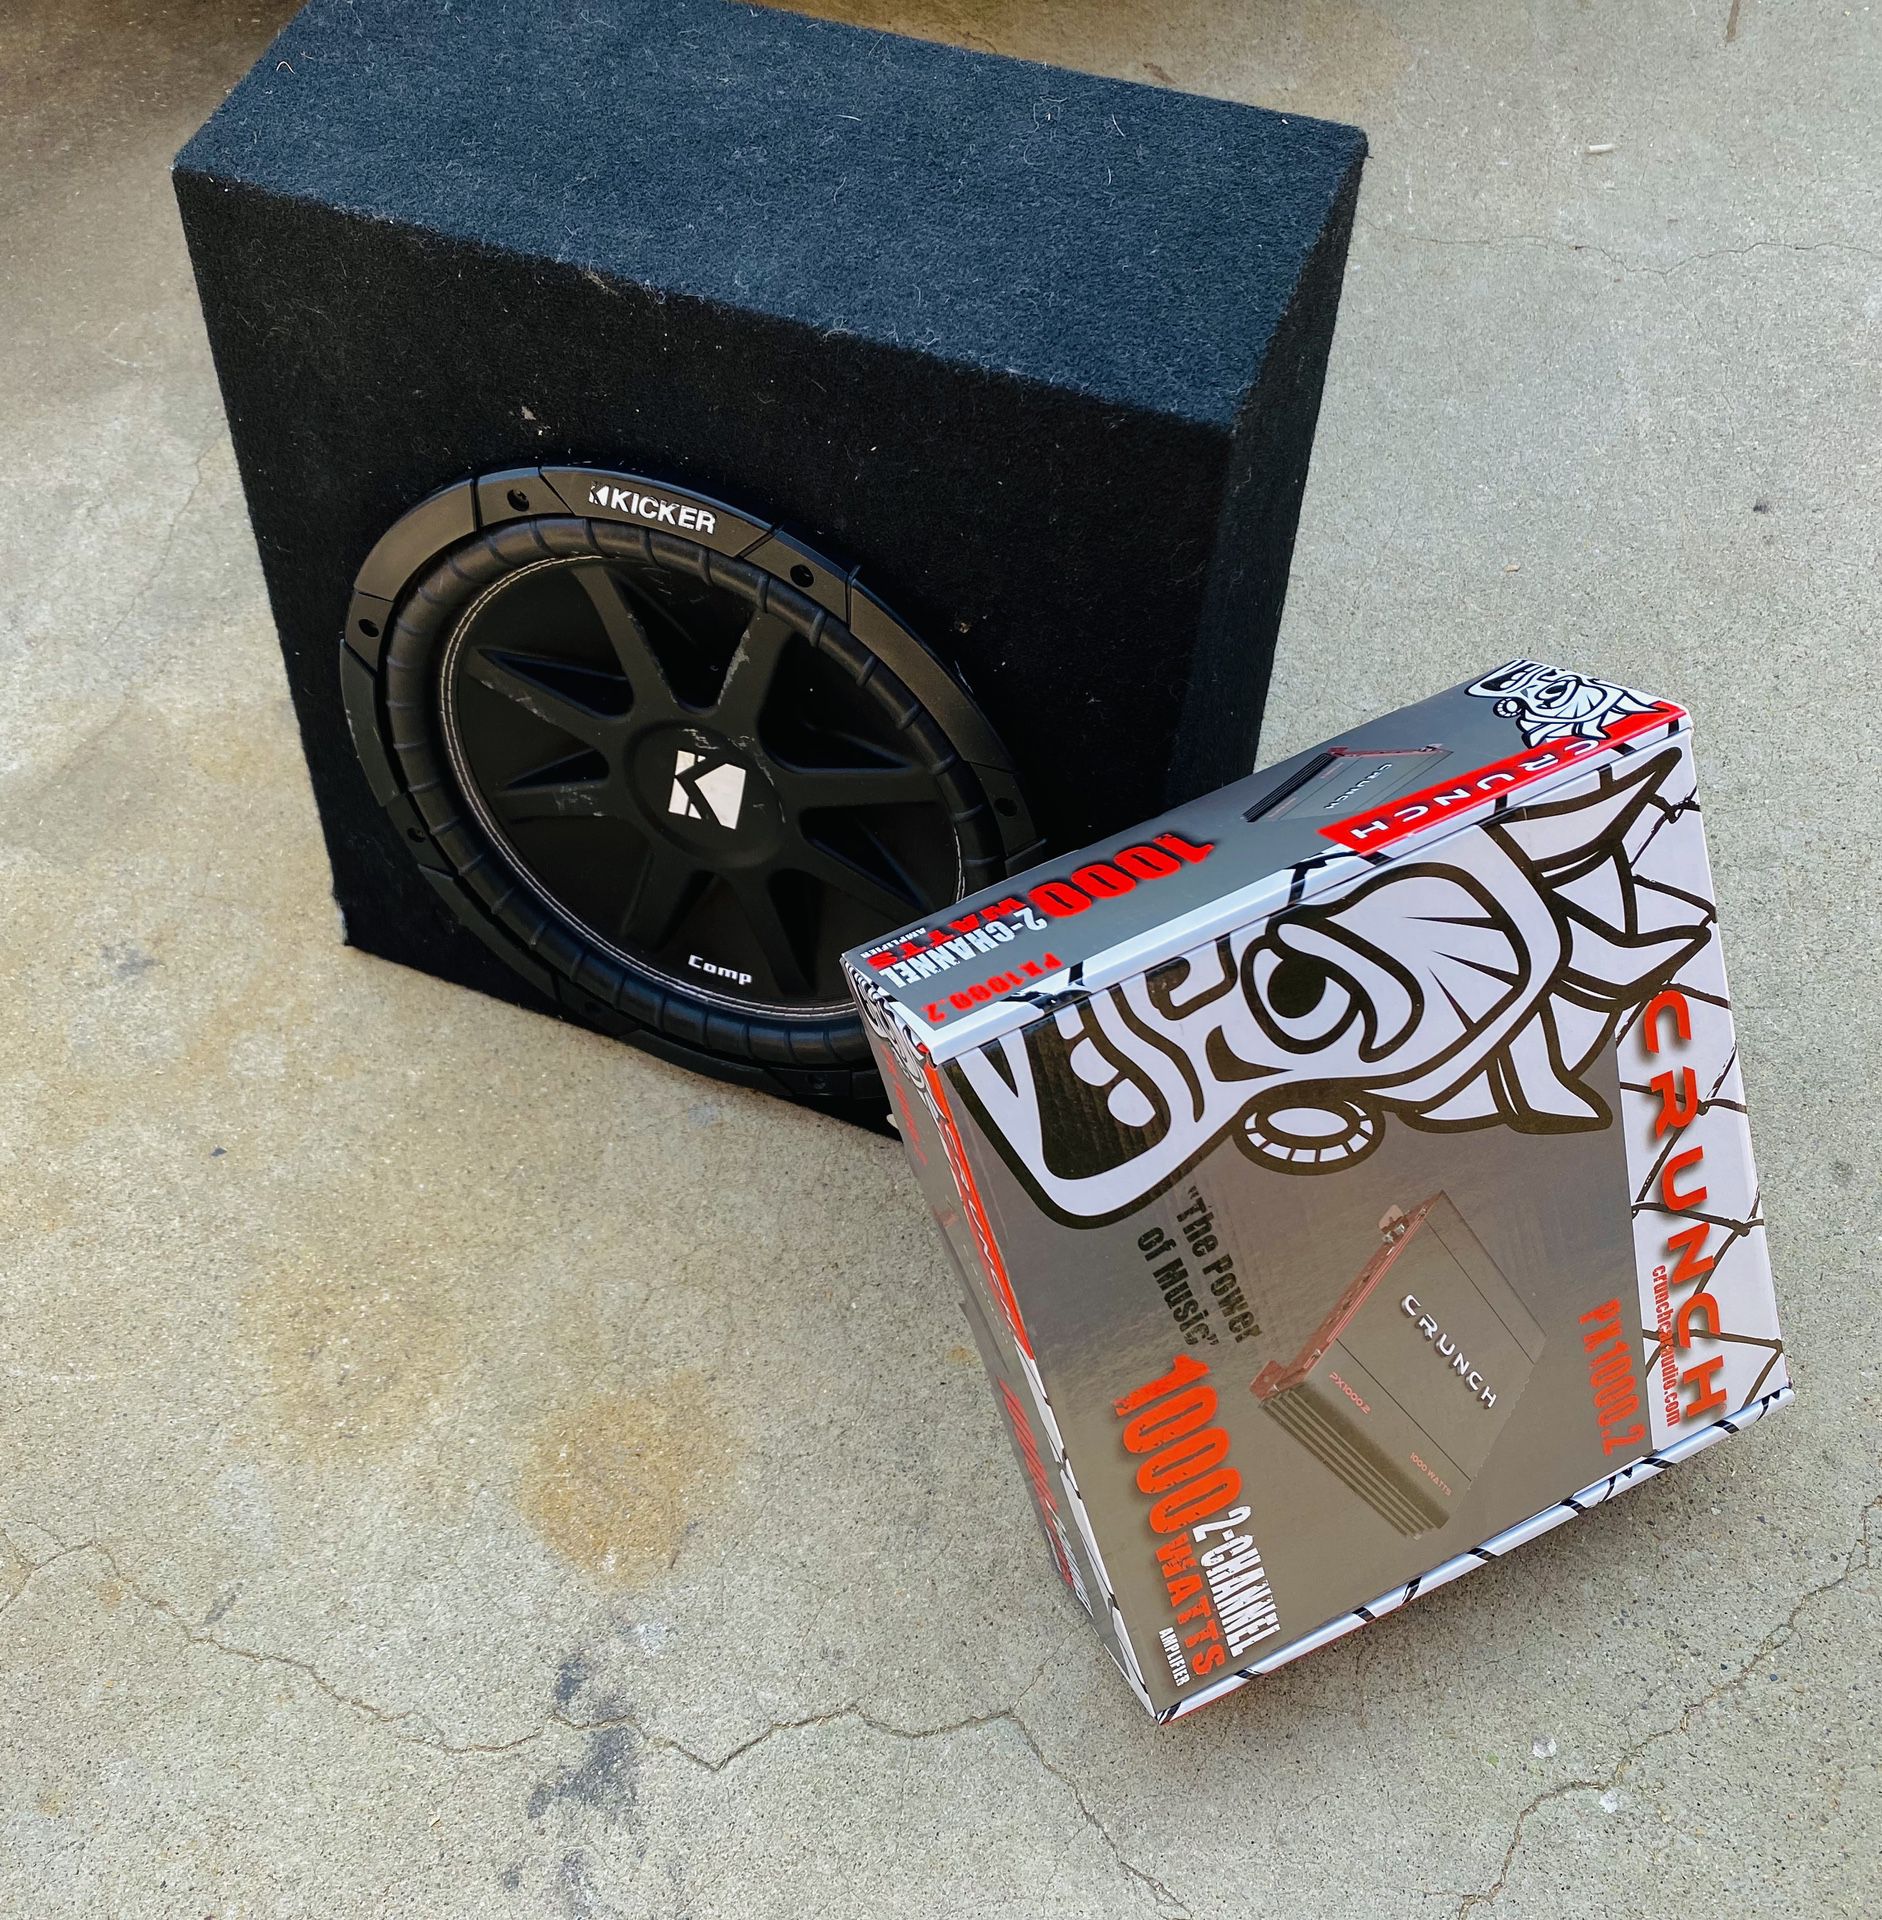 $150 no less / Kicker Comp 12 inch Sub / ELine Sub Box / new amp